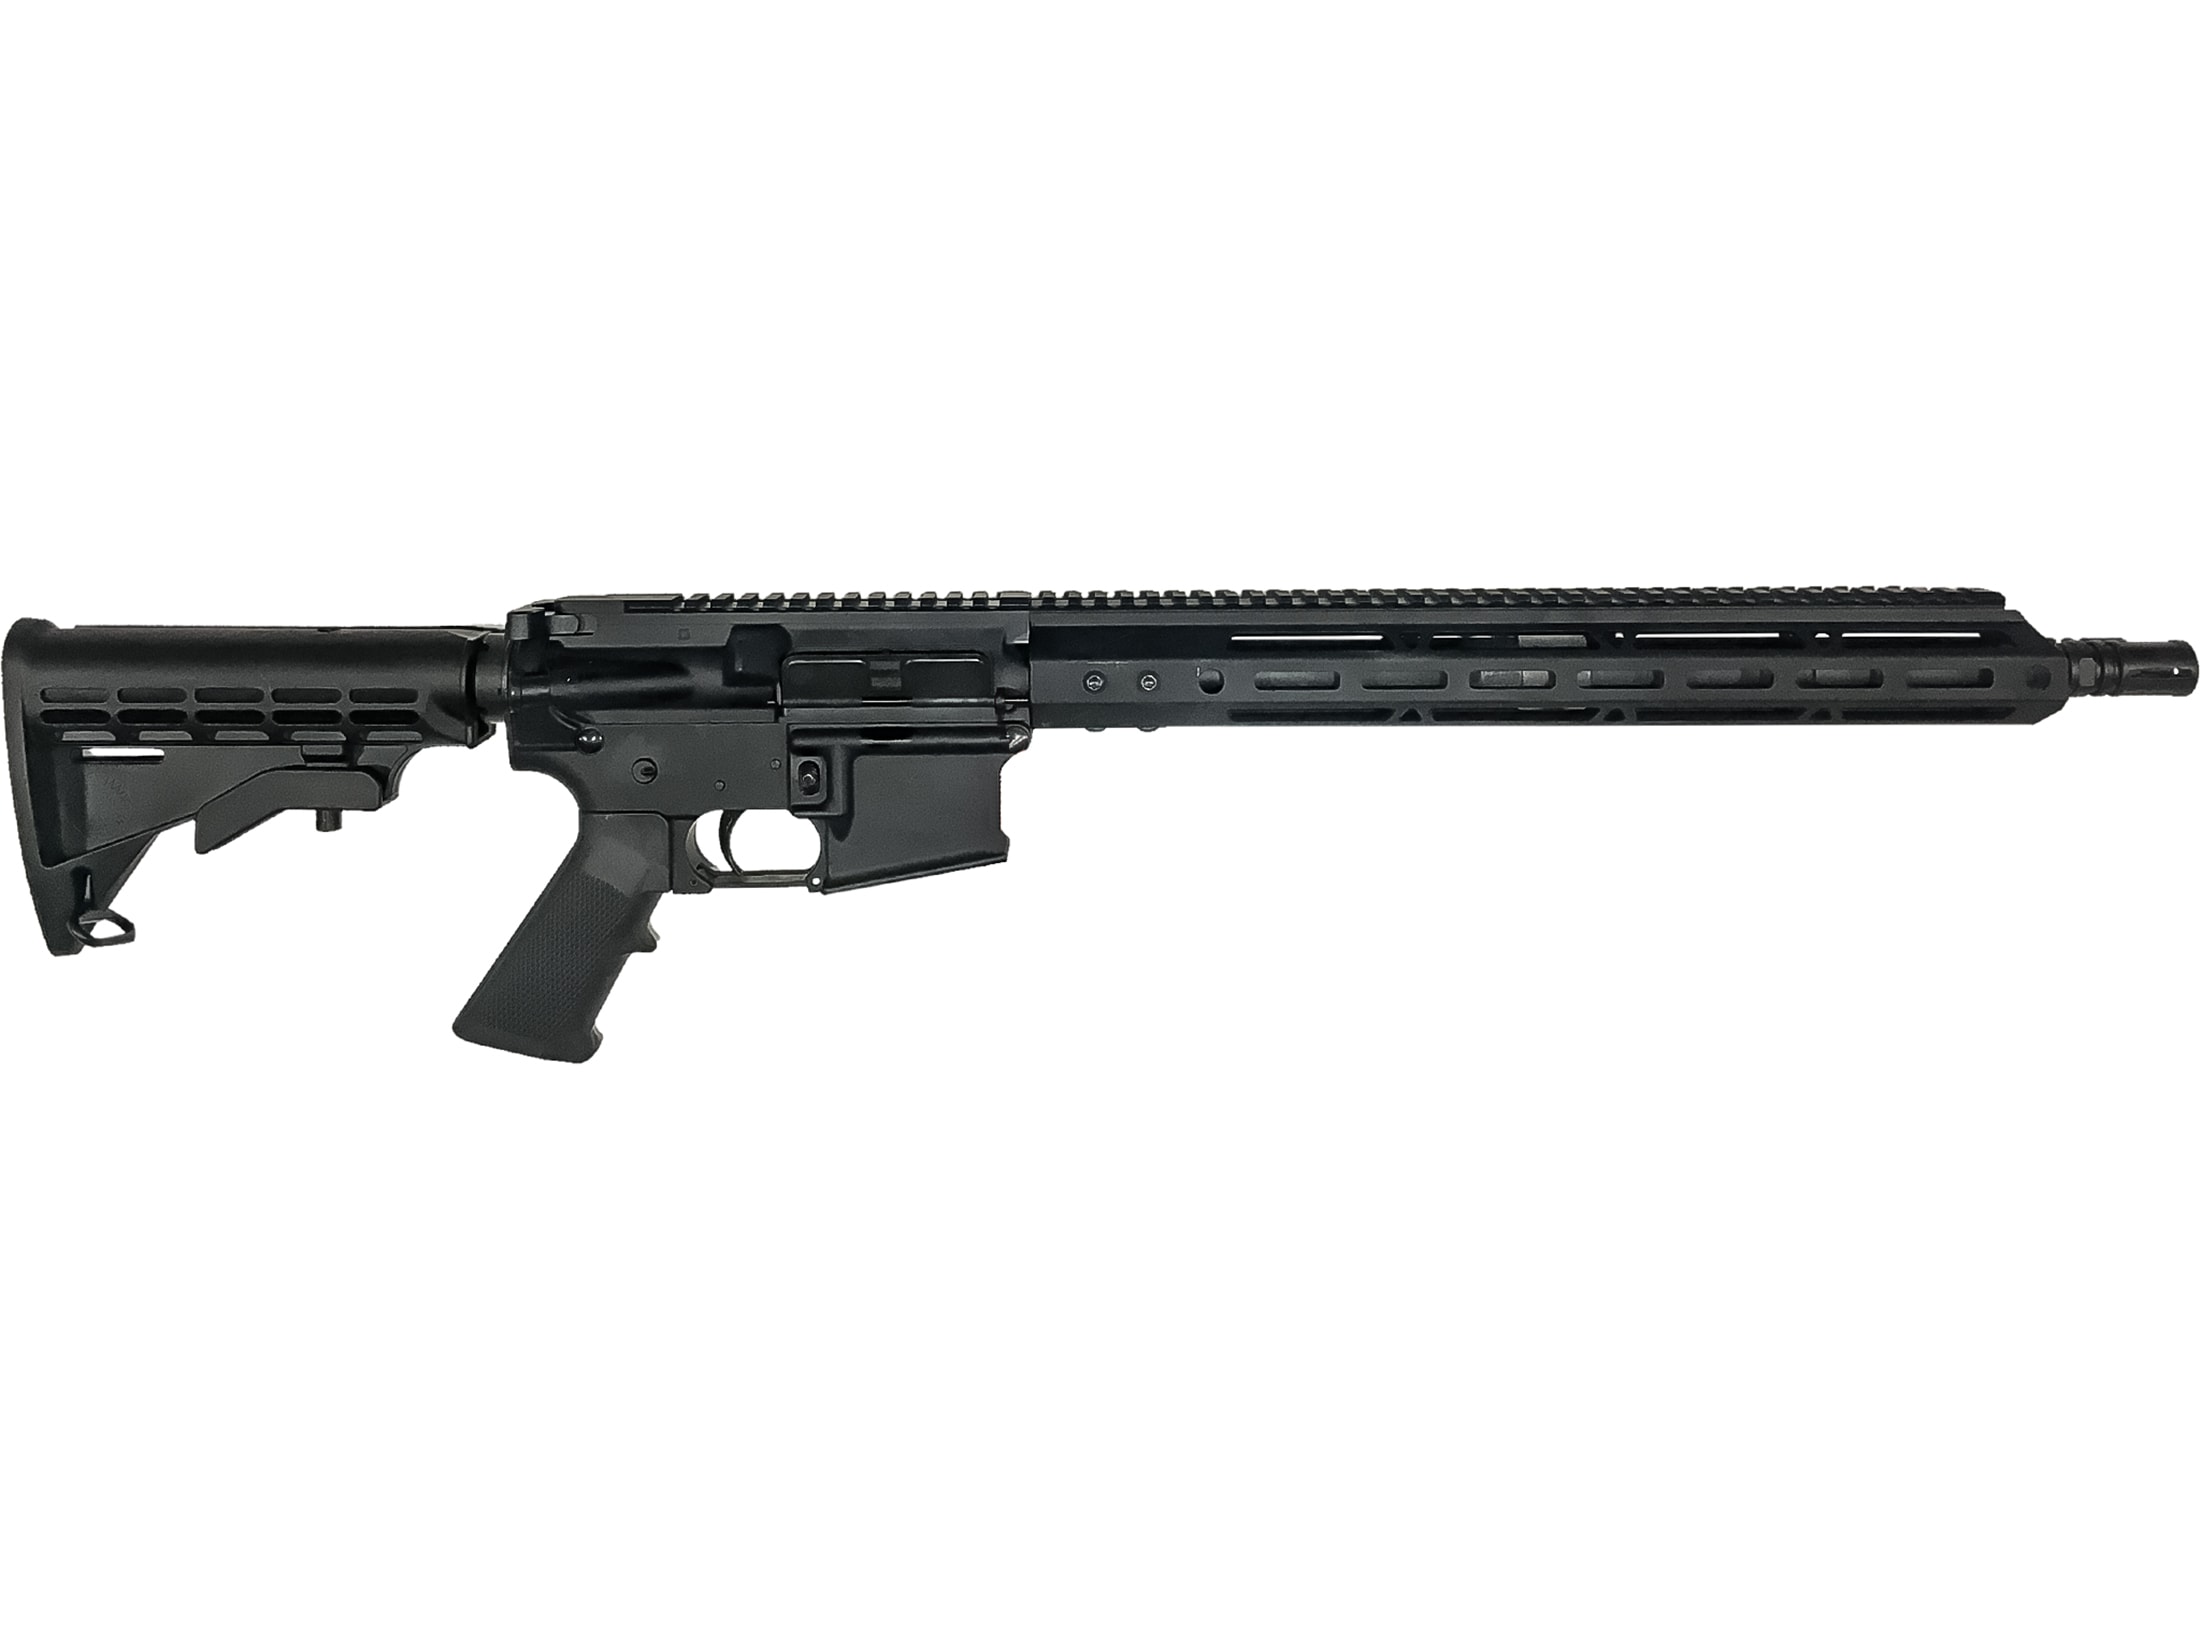 Image of Bear Creek Arsenal AR-15 A3 Carbine 5.56x45mm NATO Semi-Automatic Rifle 16" Barrel 30-Round